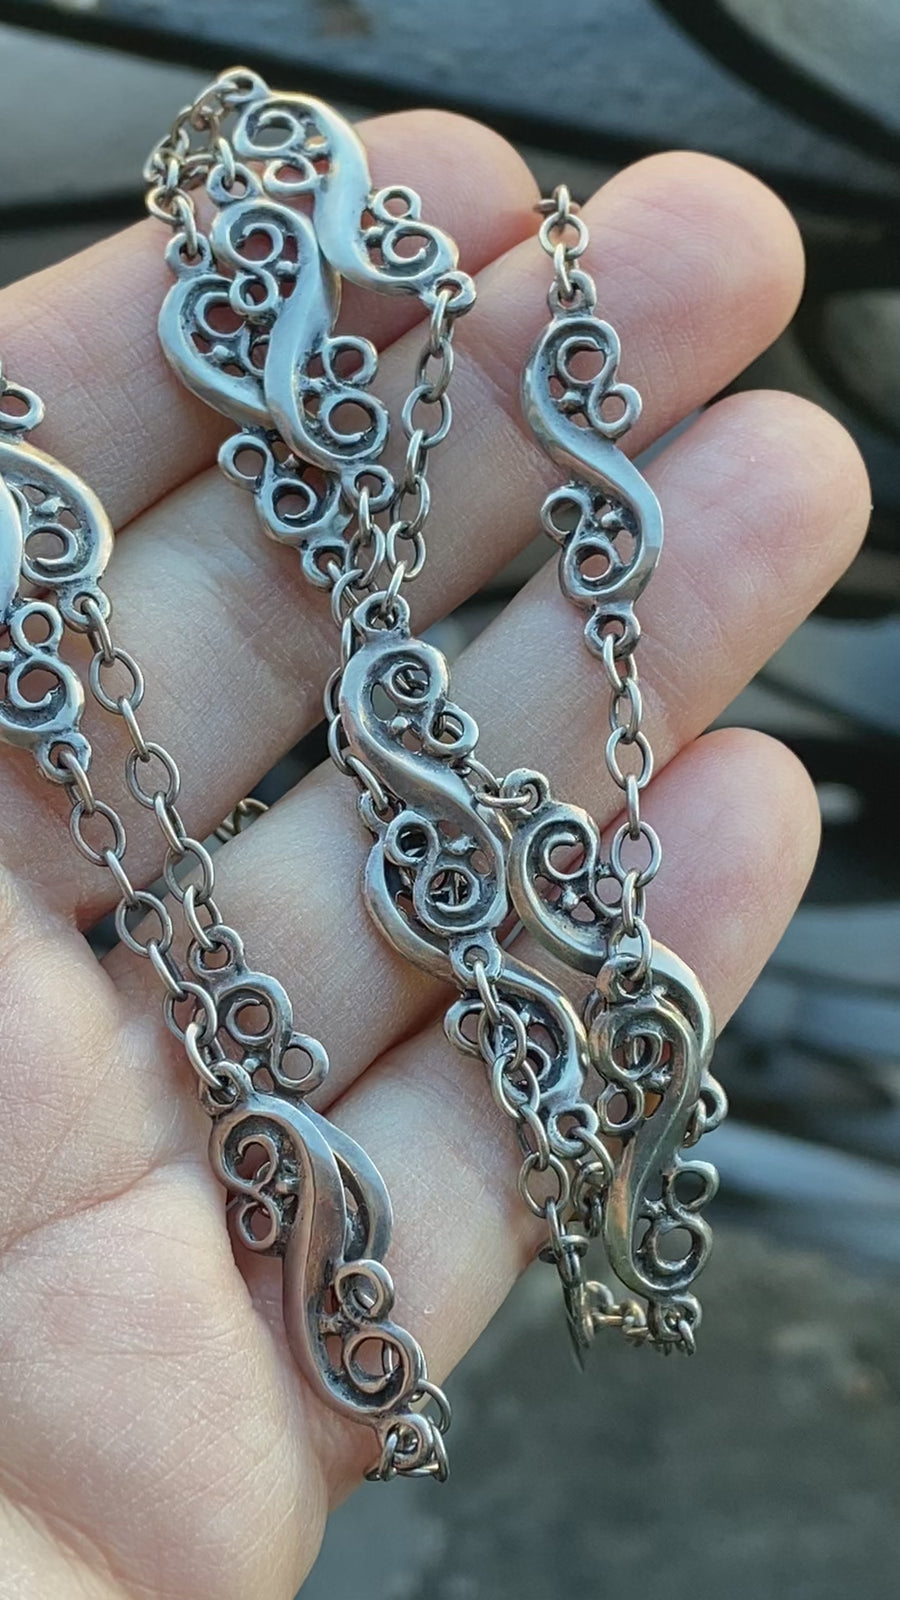 Antique Silver Chain Necklace